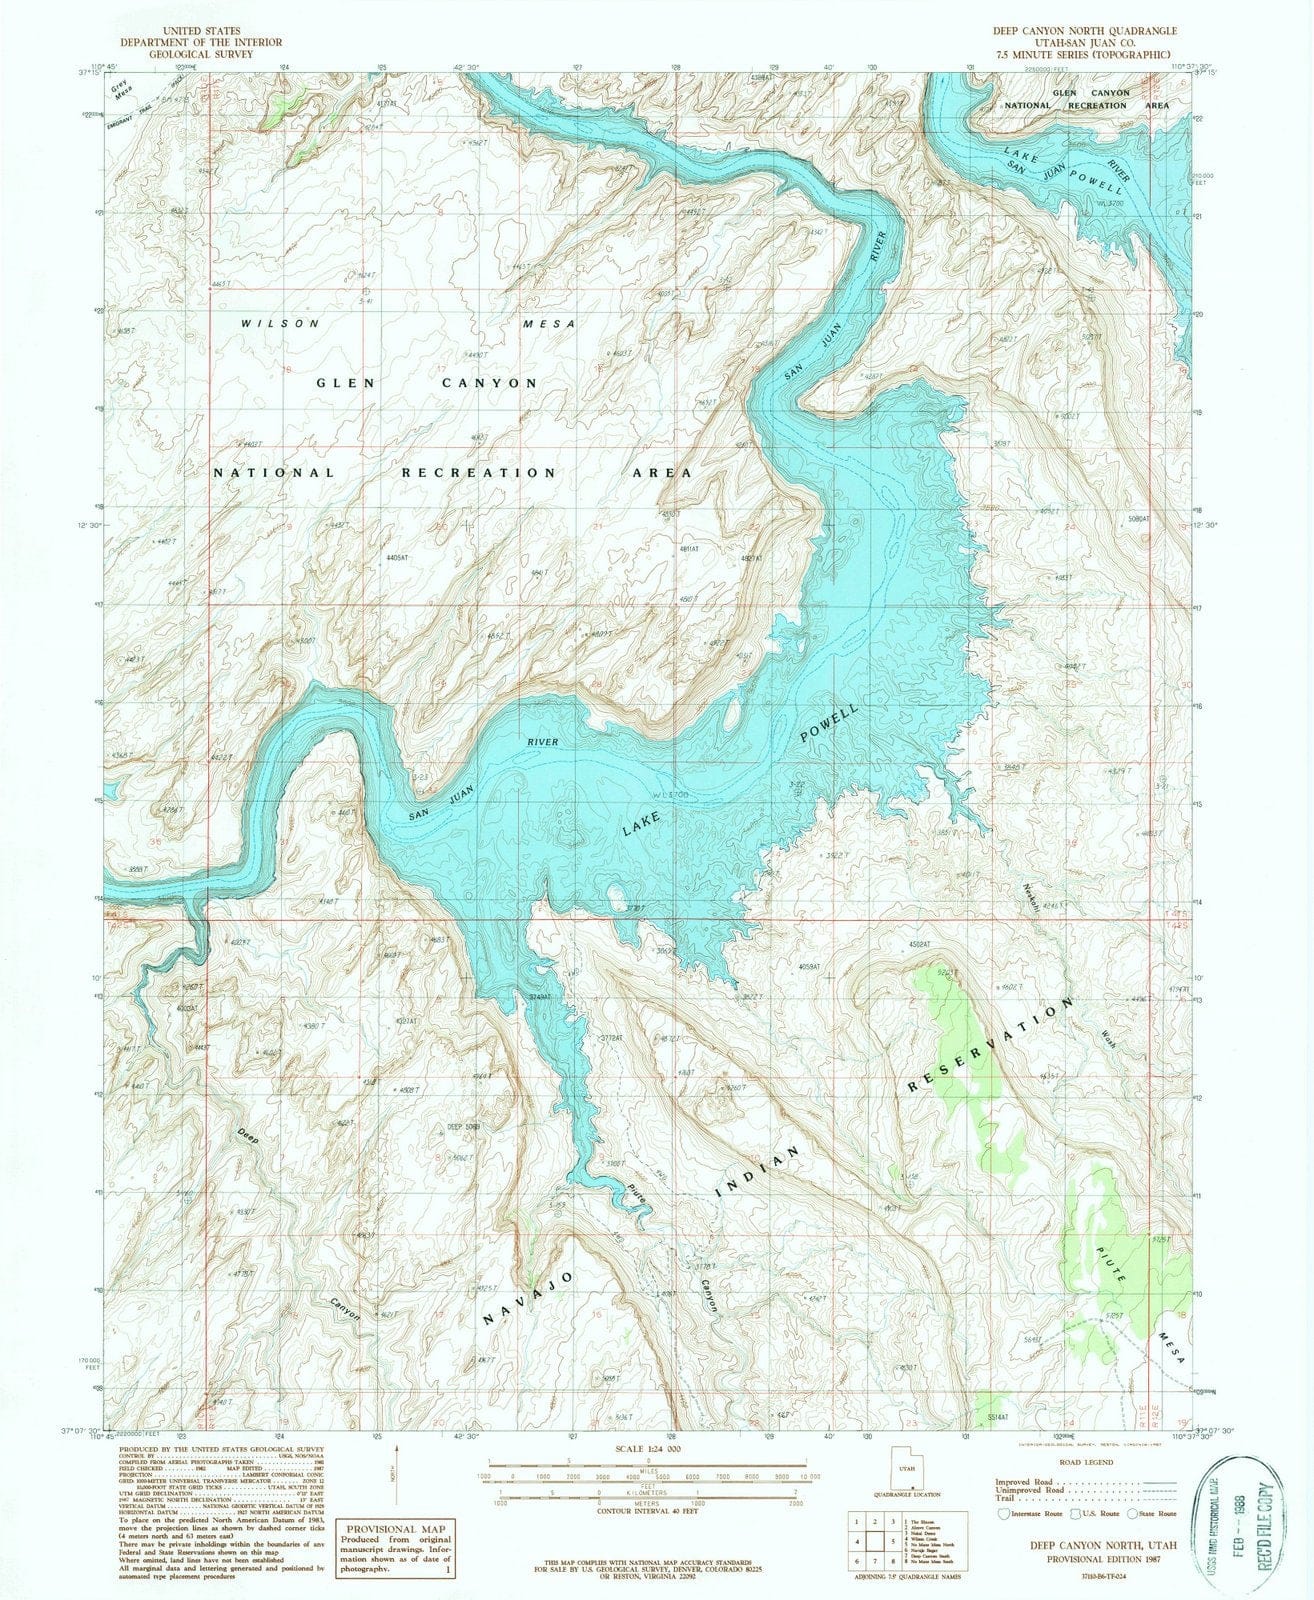 1987 Deep Canyon North, UT - Utah - USGS Topographic Map